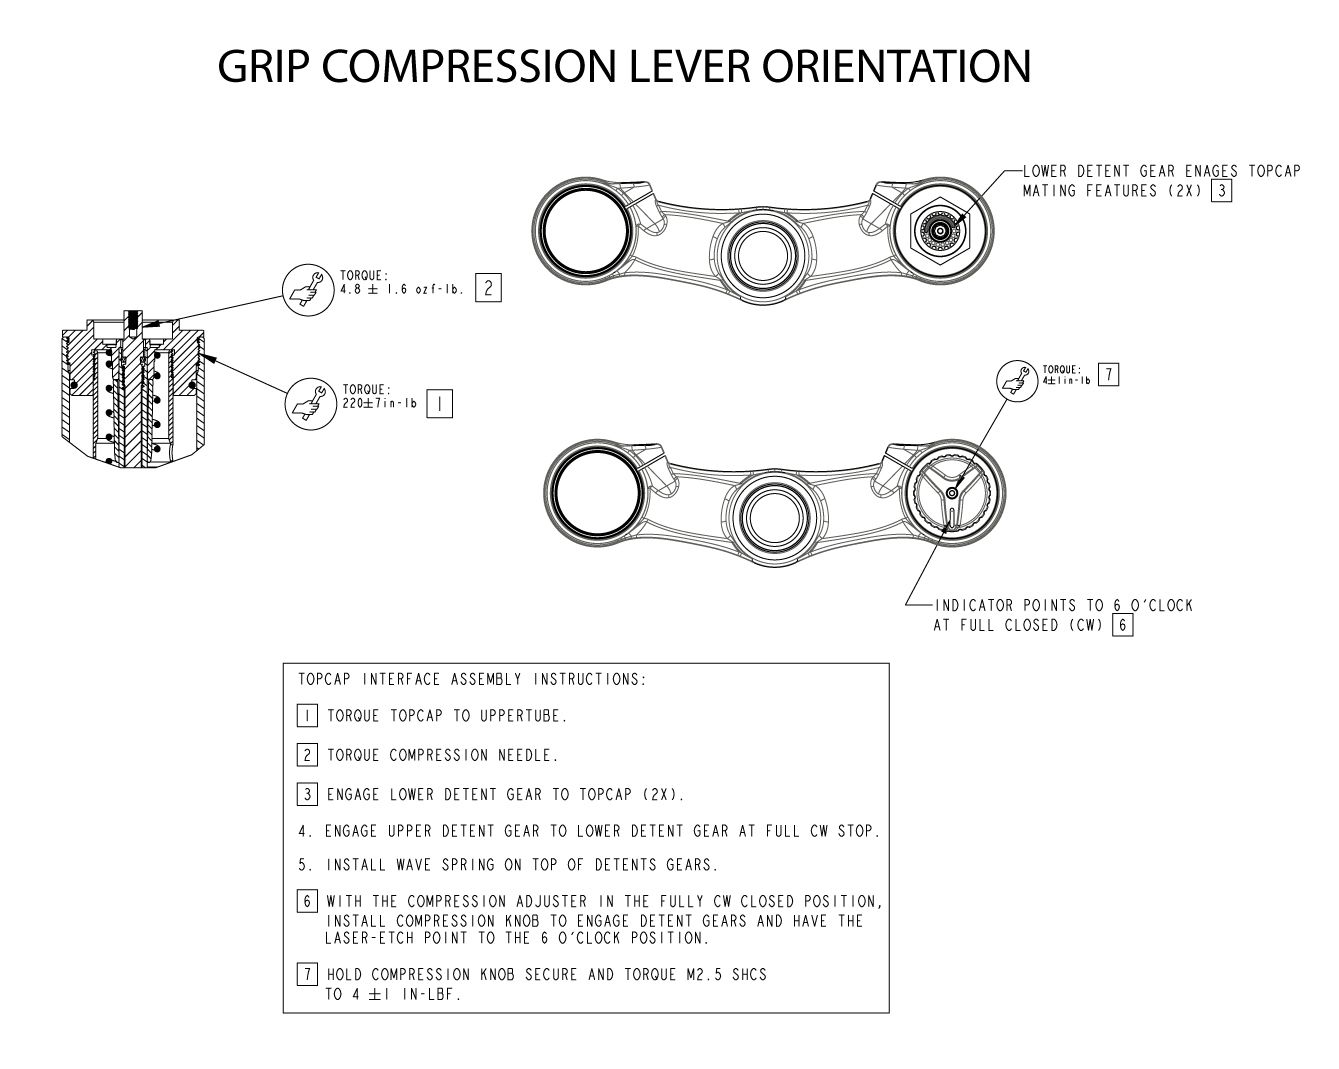 Grip-compression-lever-orientation-for-40-58.jpg